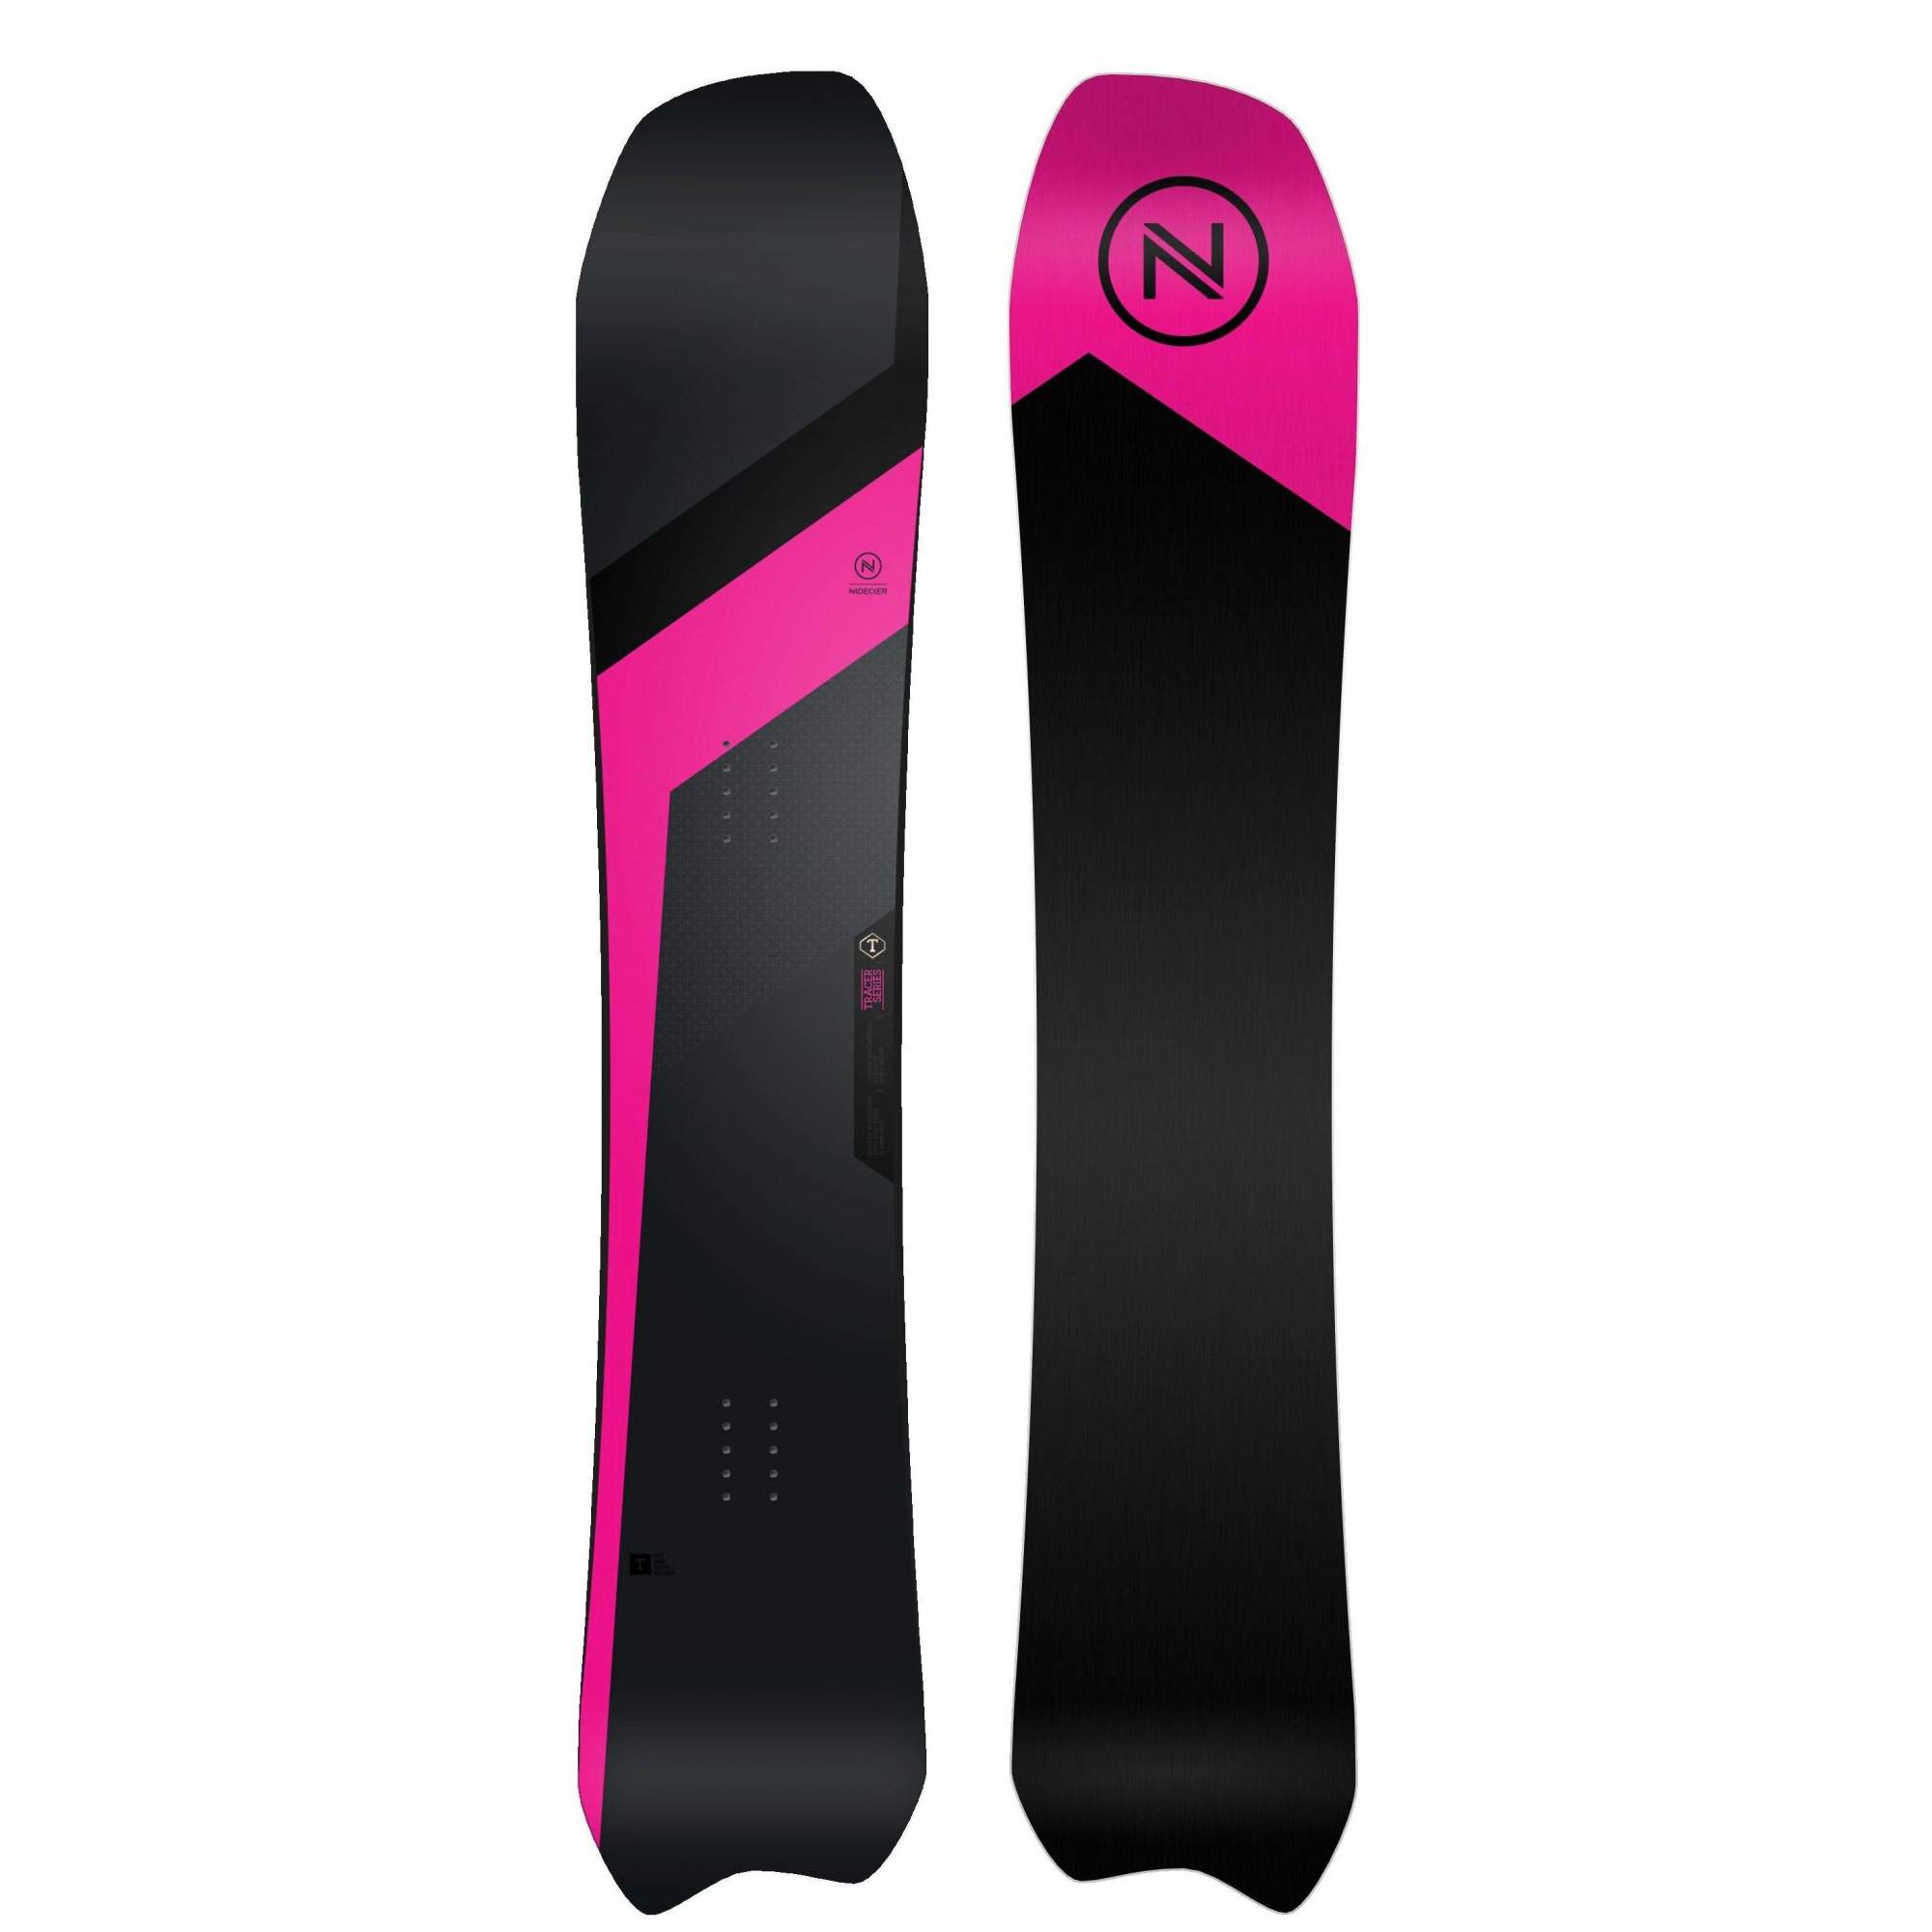 Сноуборд Nidecker Tracer-Regular 2019, black/pink, 157 см